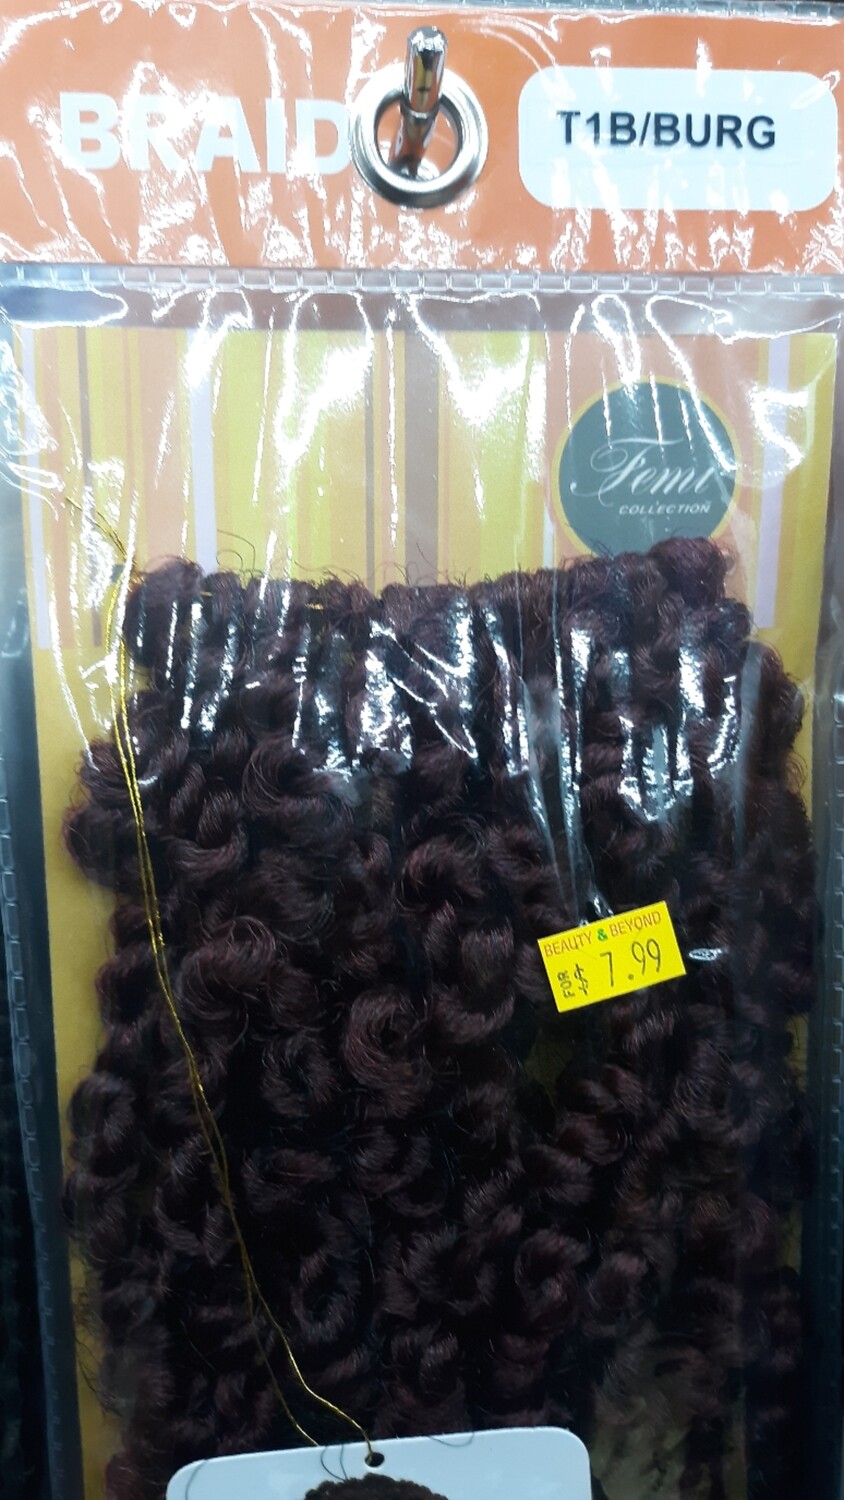 Femi Collection Crochet 14" (T1B/BURG)